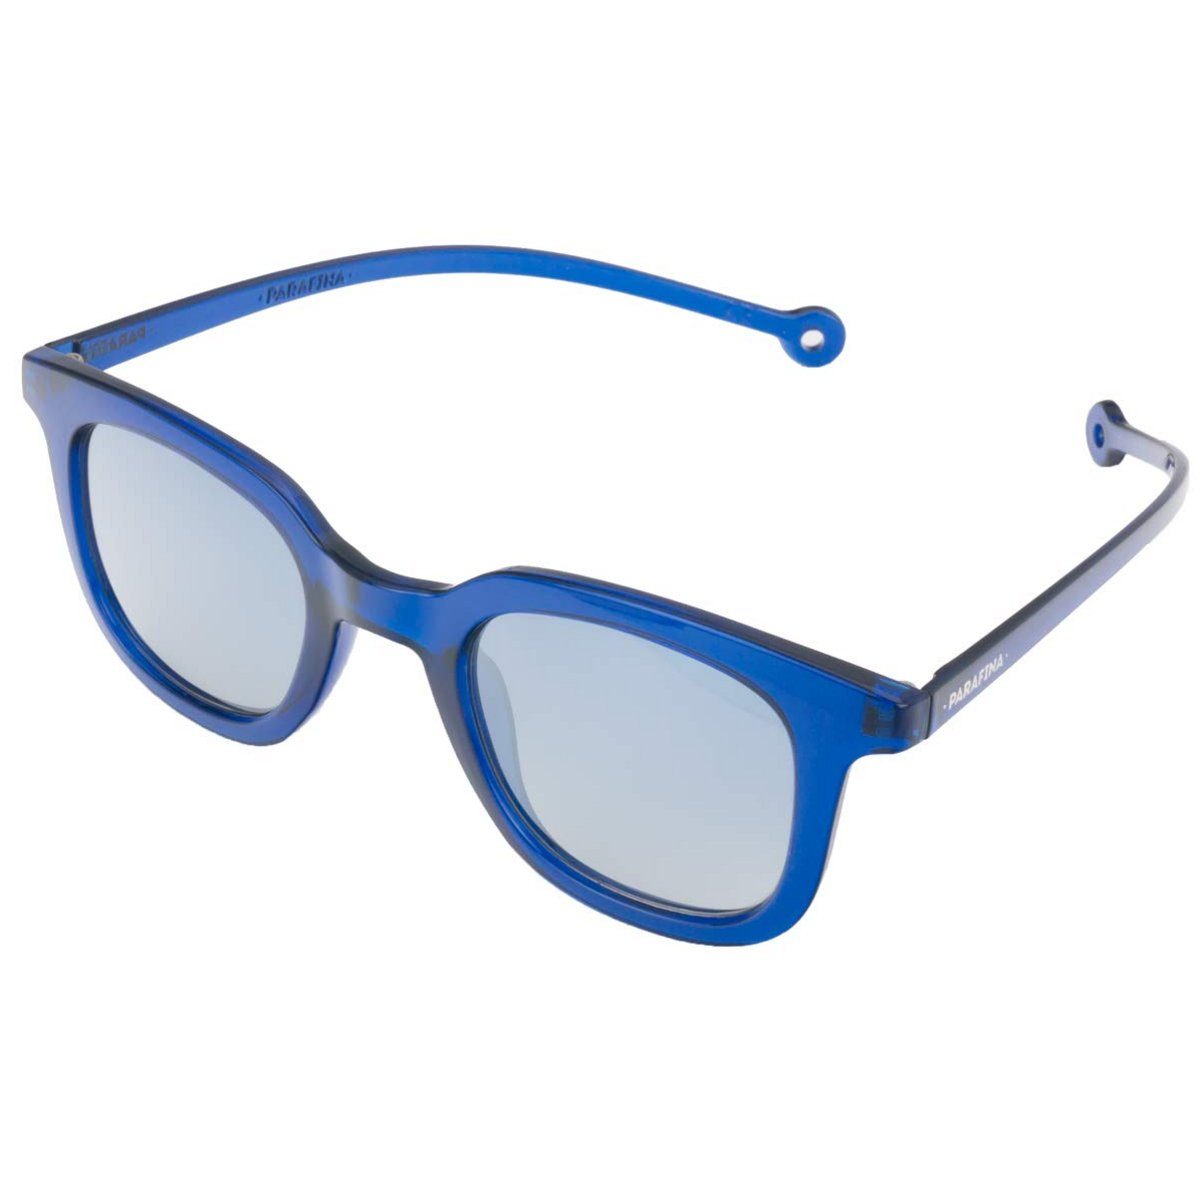 blau PARAFINA solan-blue (1-St) Sonnenbrille